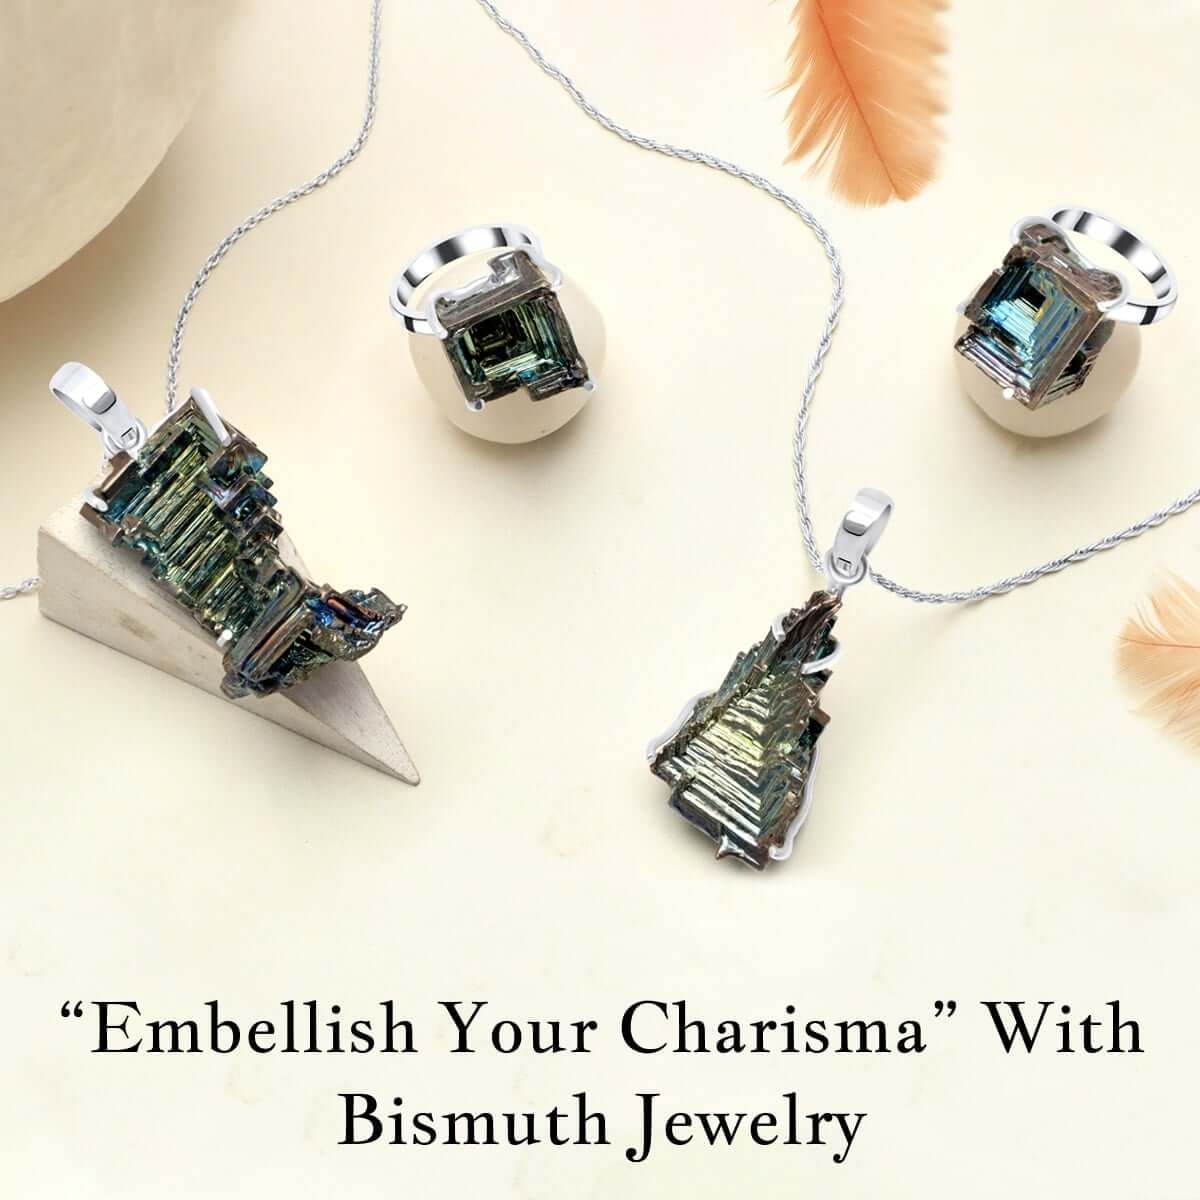 Bismuth jewelry